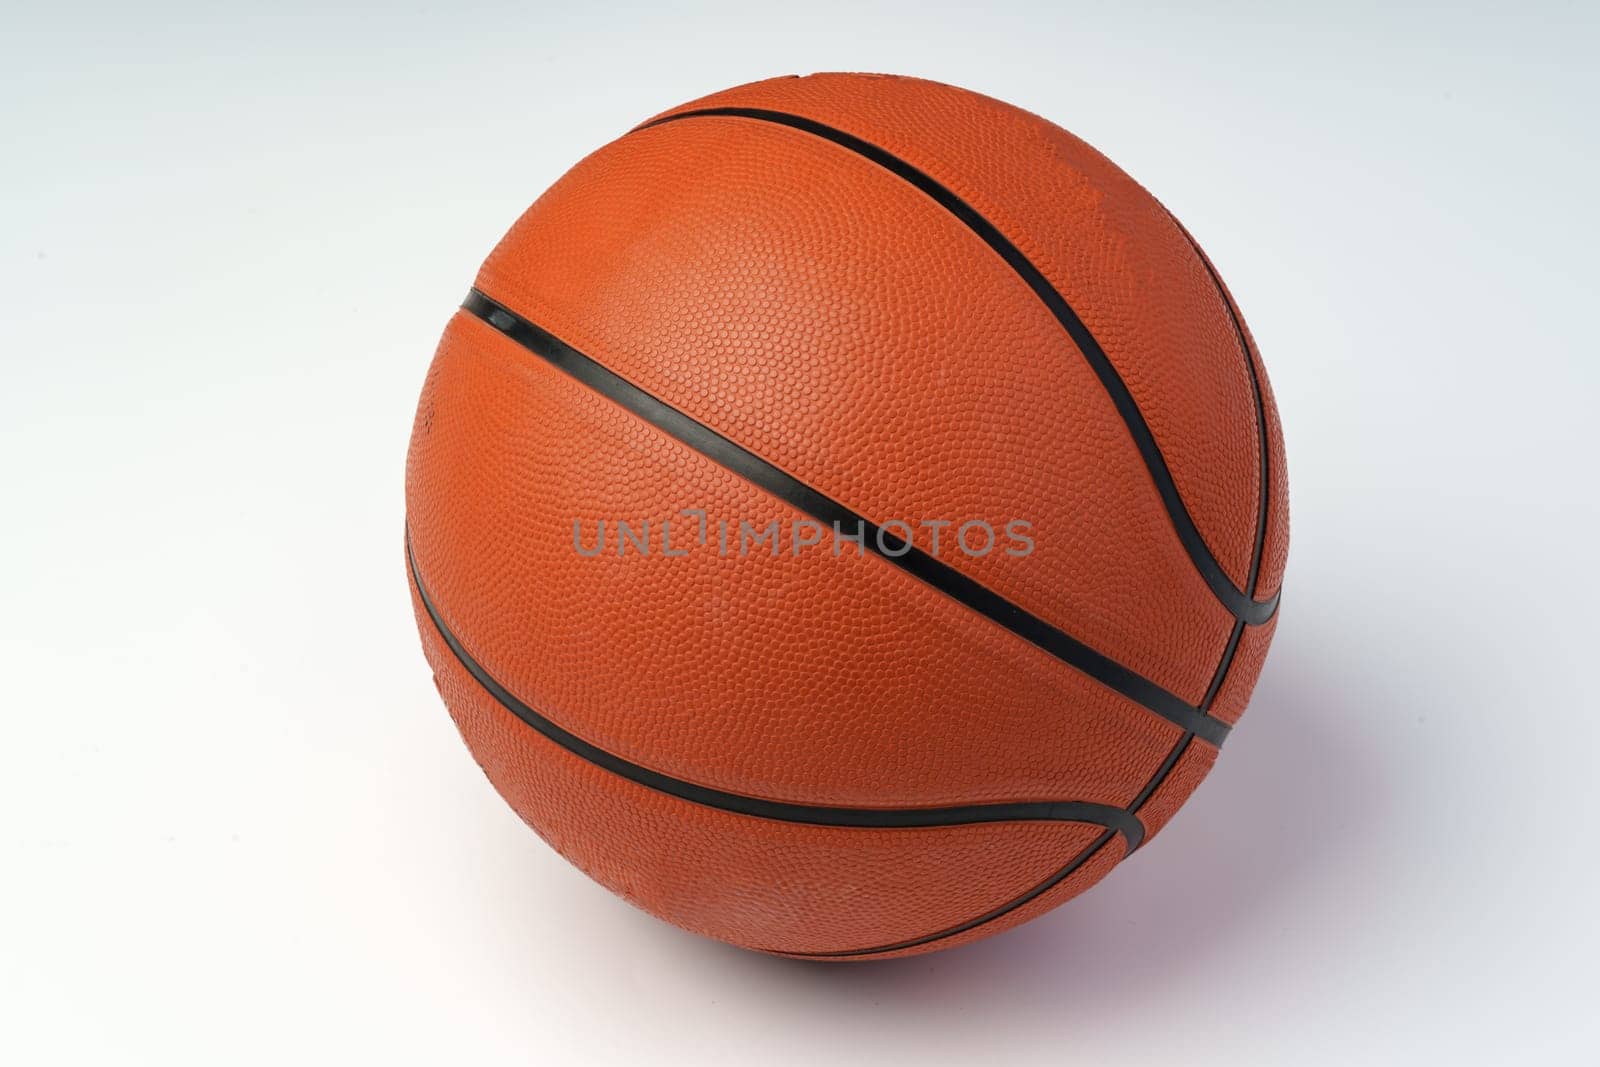 New orange basketball ball isolated on white by Fabrikasimf